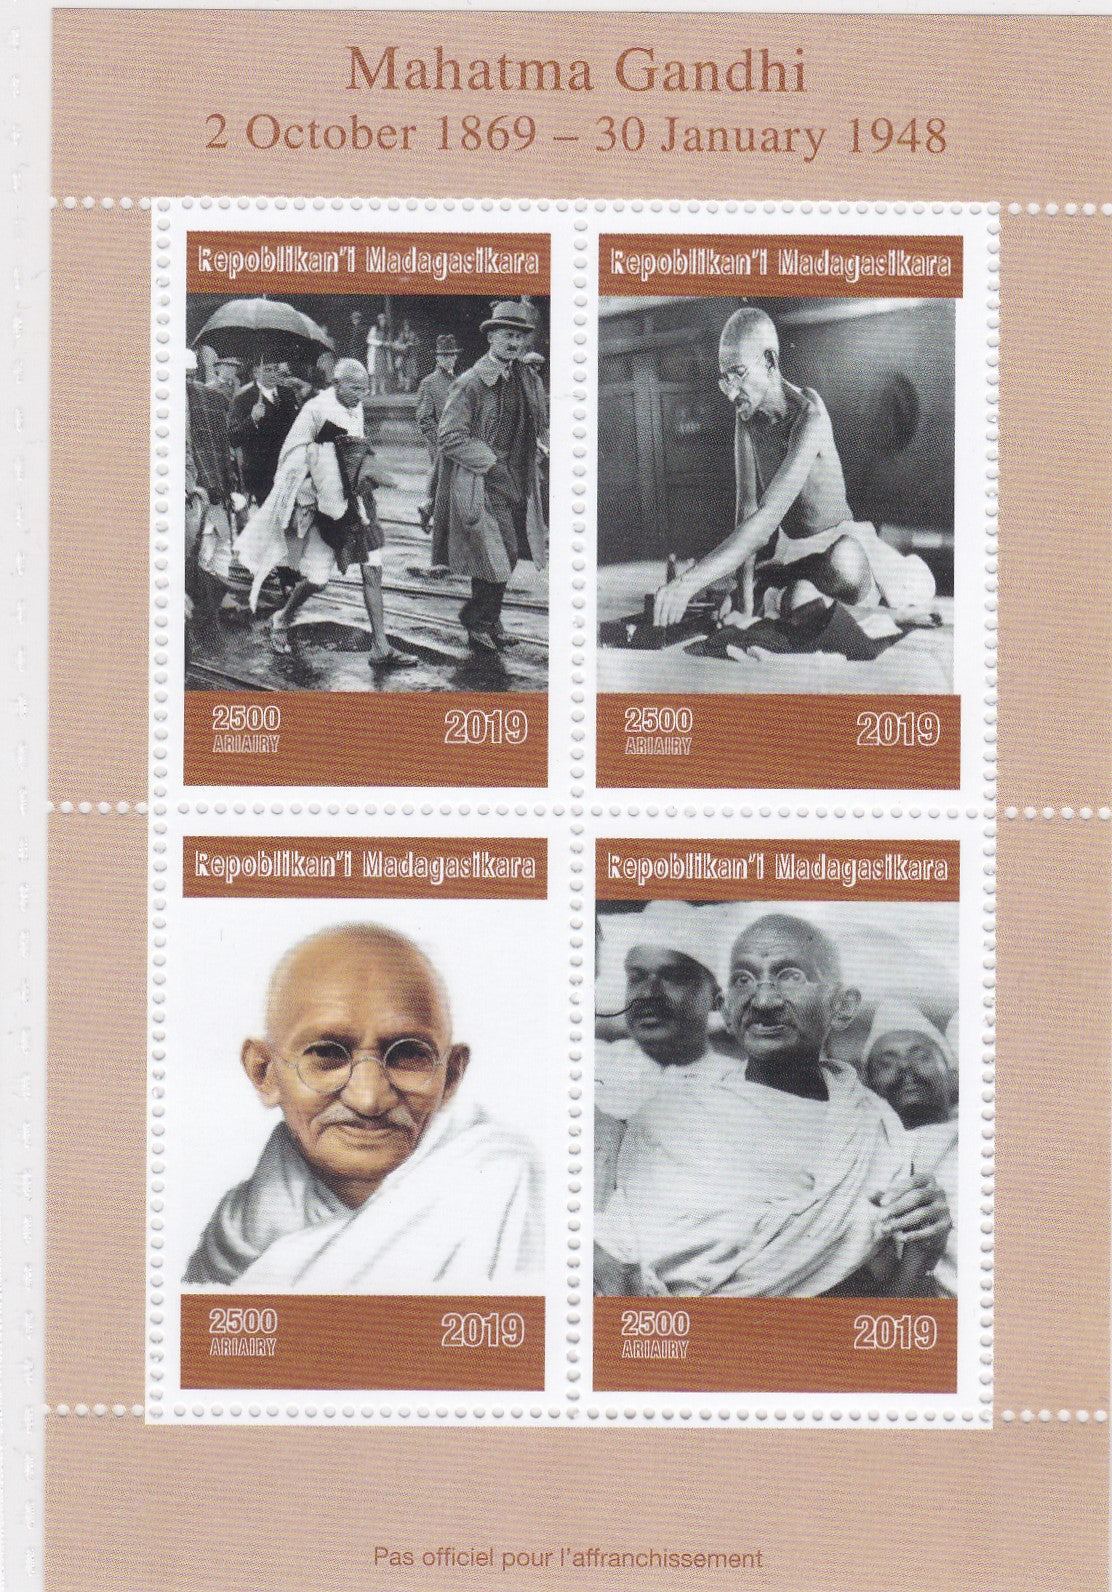 Madagascar-Mahatma Gandhi 2019 stamps